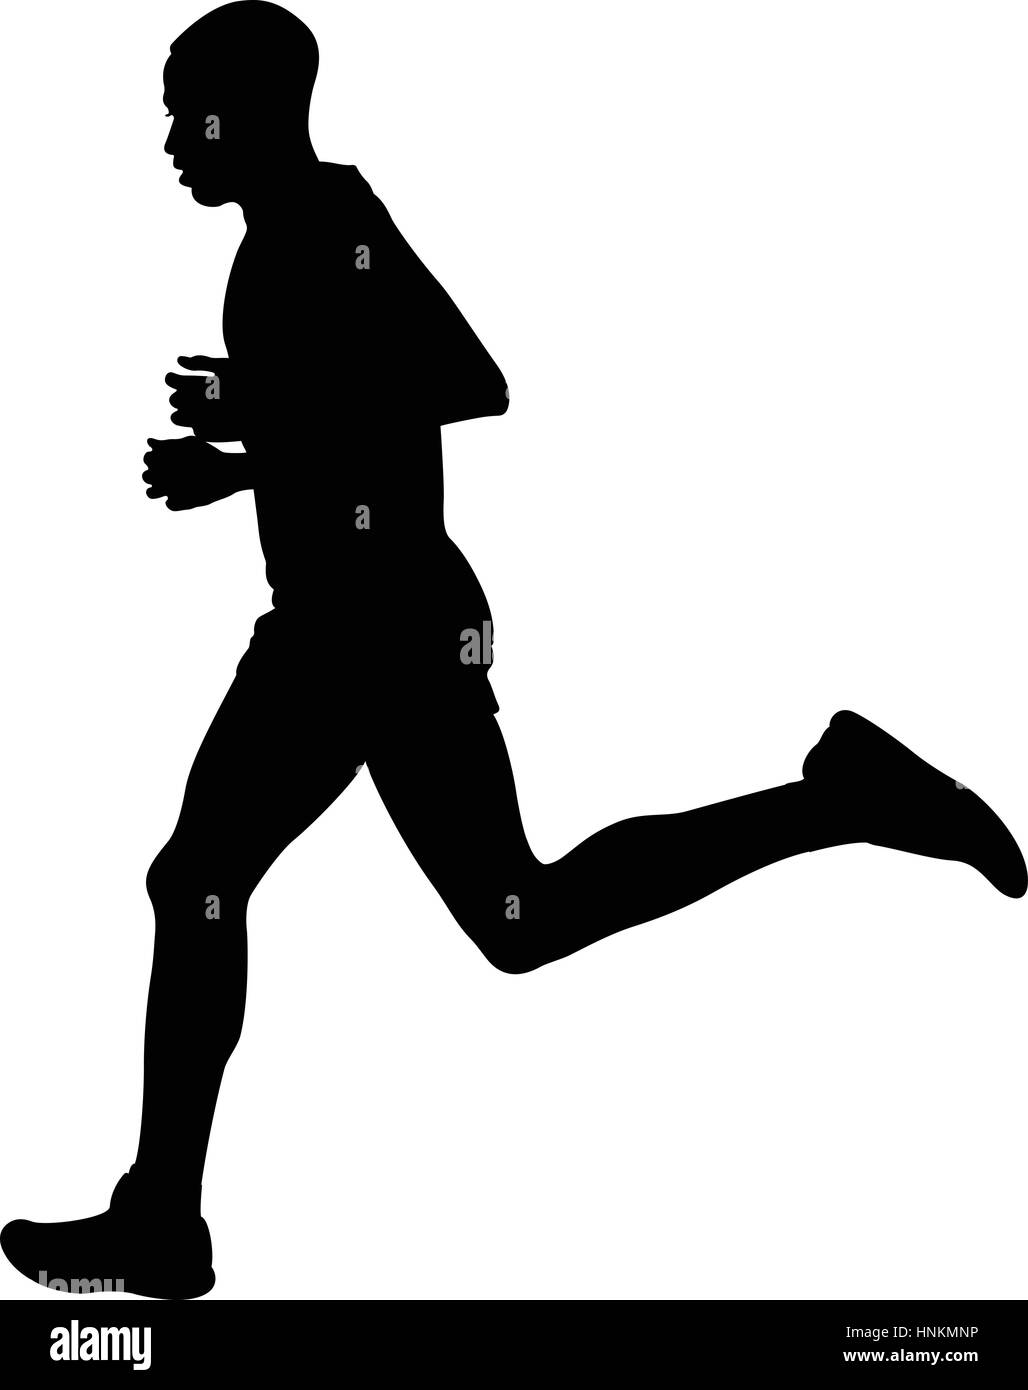 Kenyan athlete marathon runner running black silhouette Stock Vector